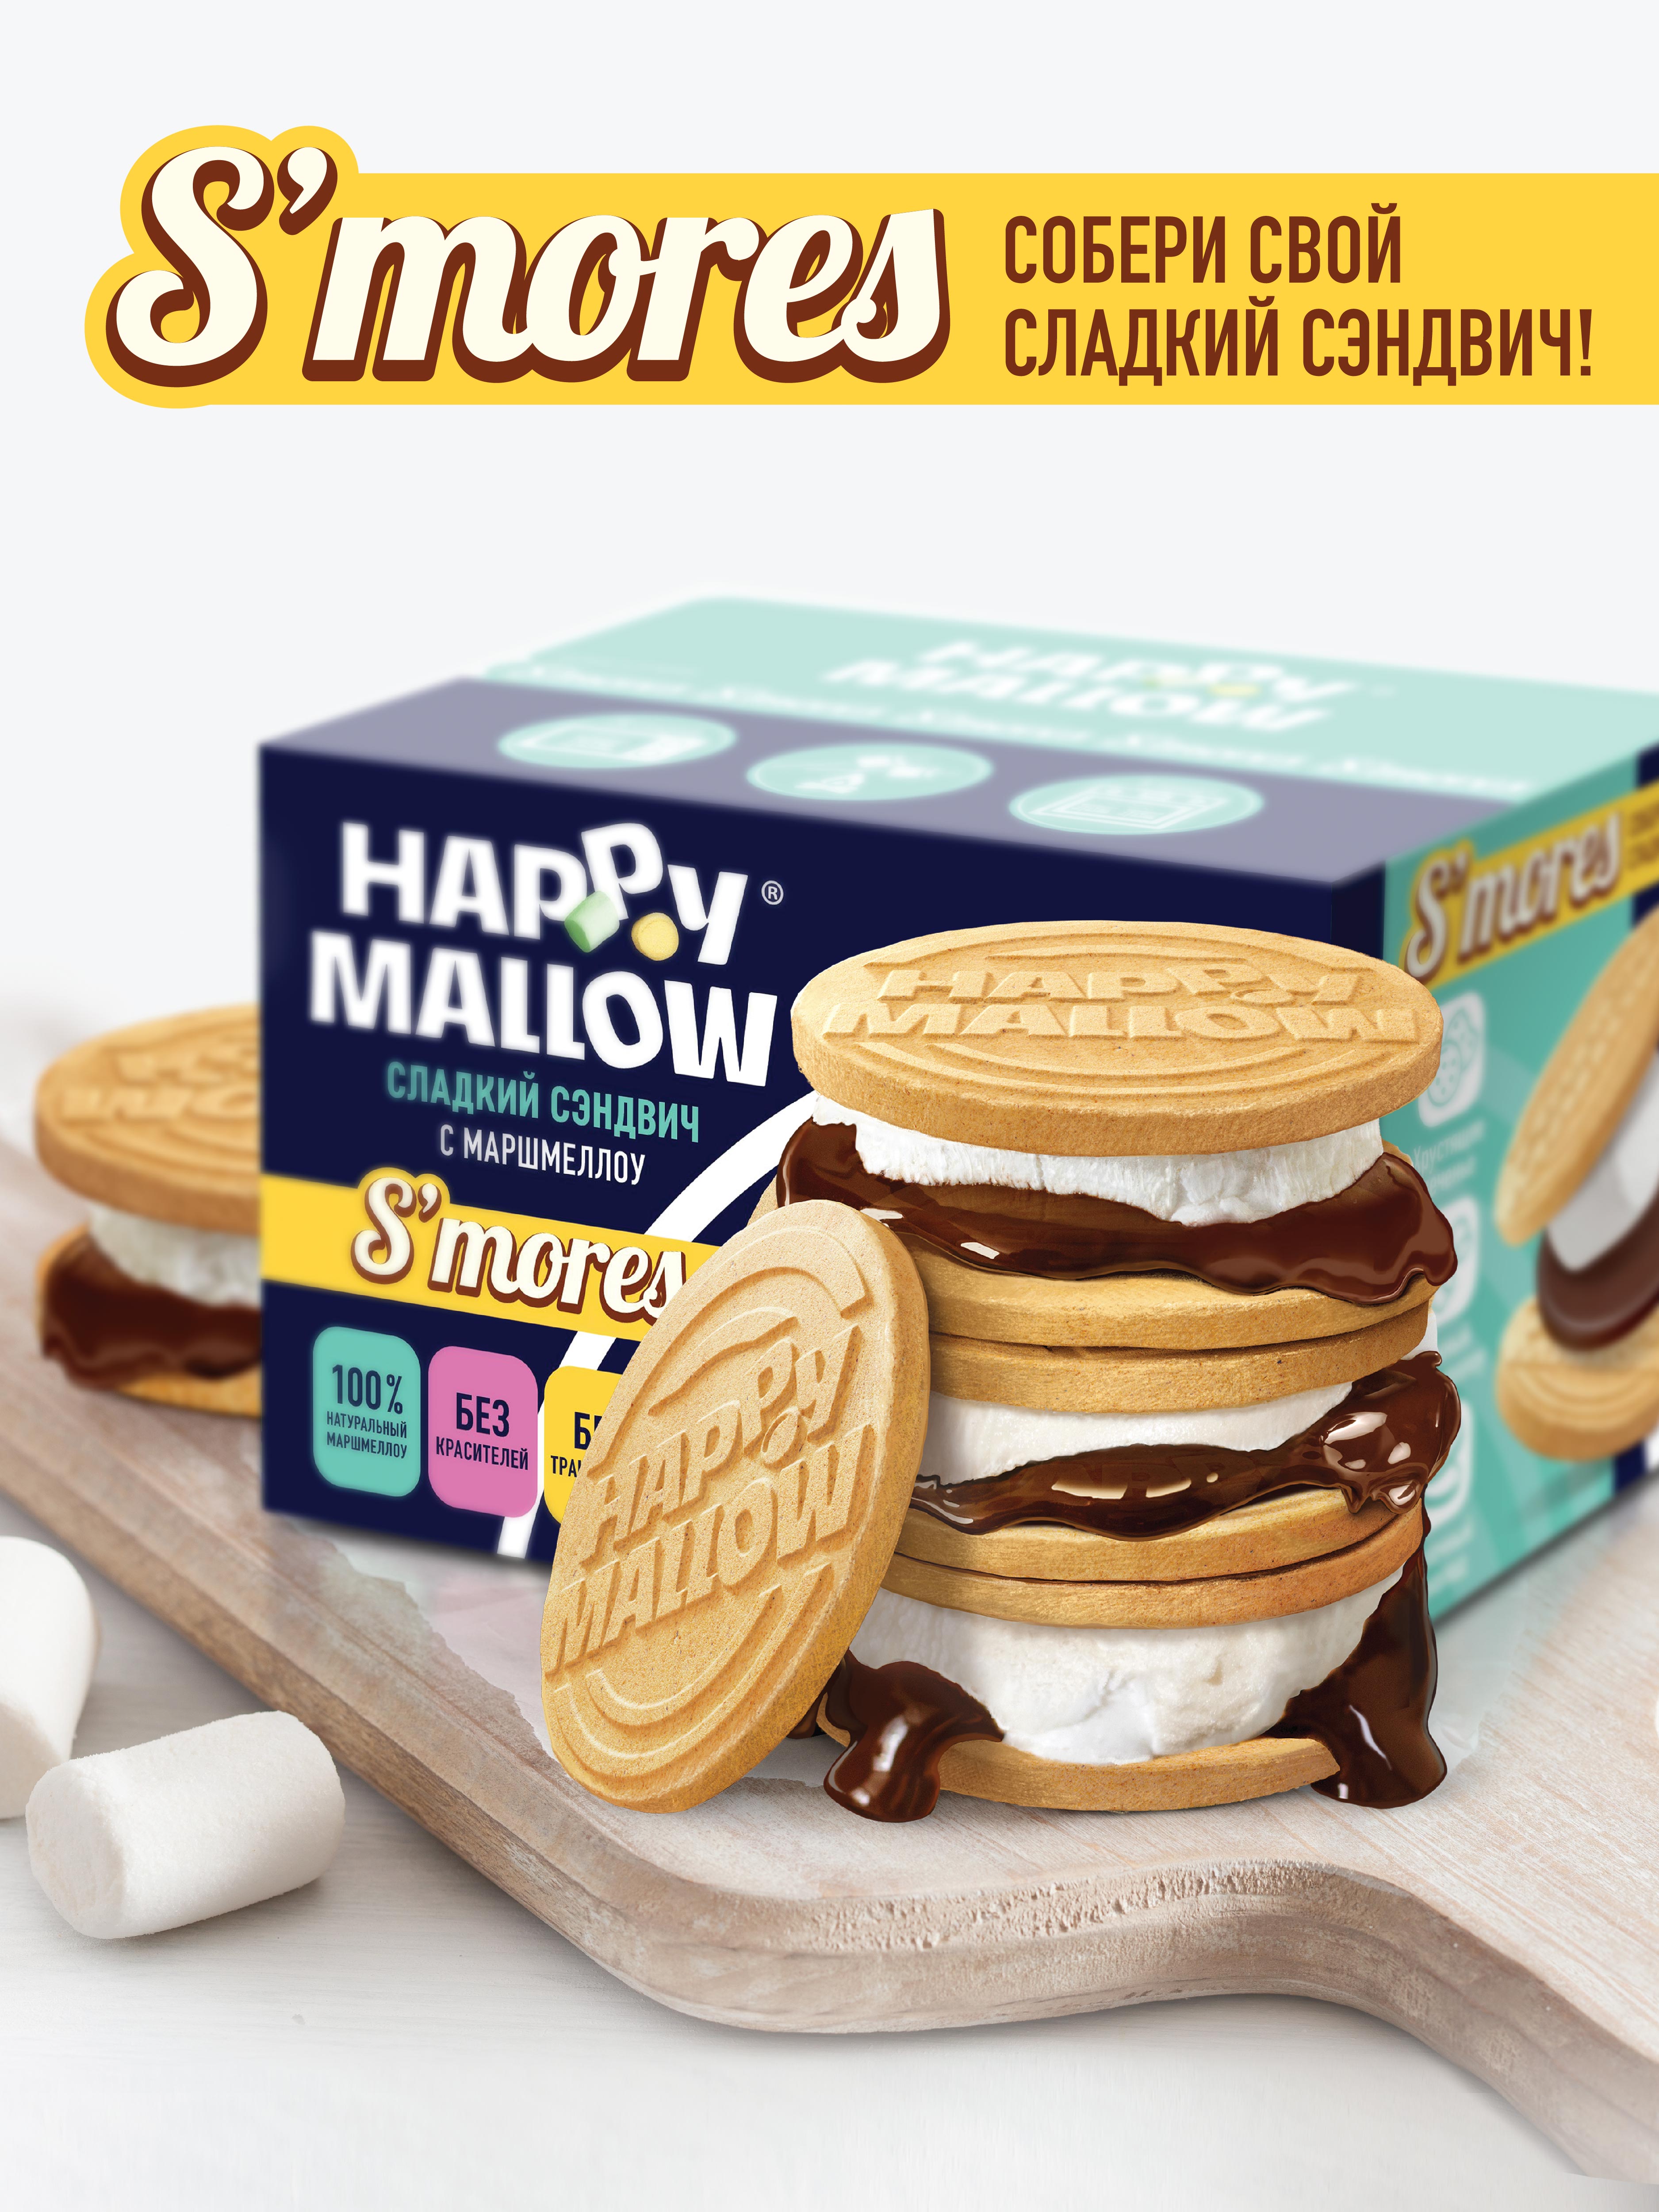 Набор для сладкого сэндвича Happy Mallow Smores, 180 г